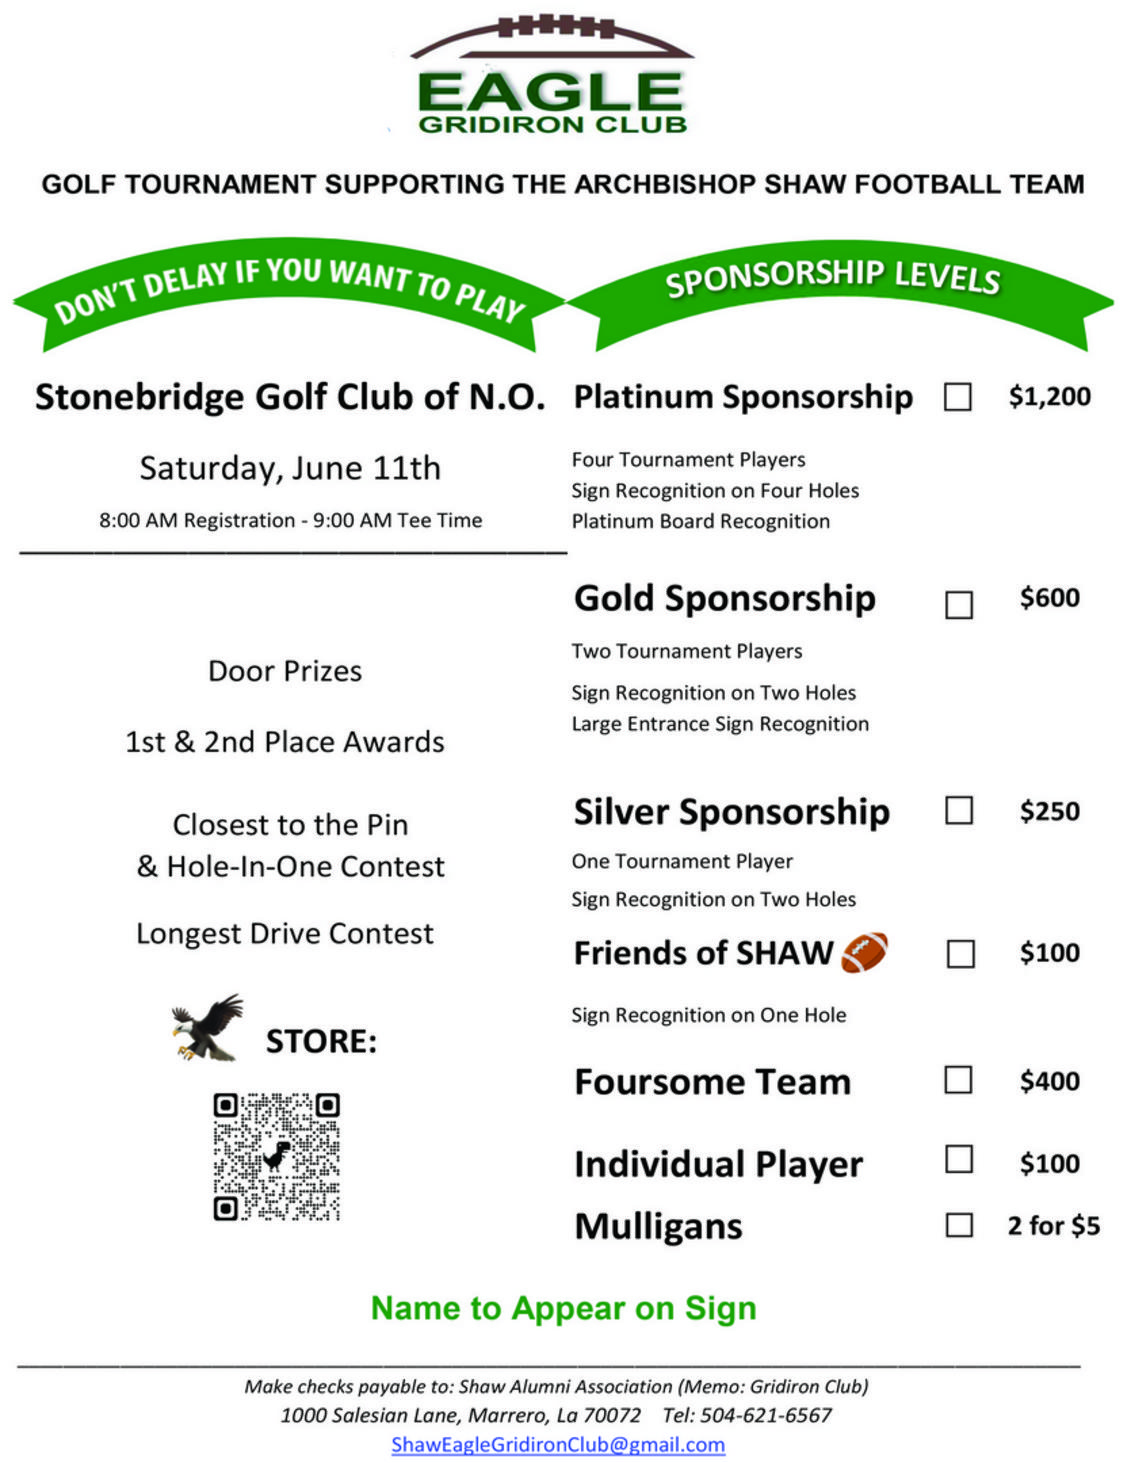 Gridiron Club Golf Tournament